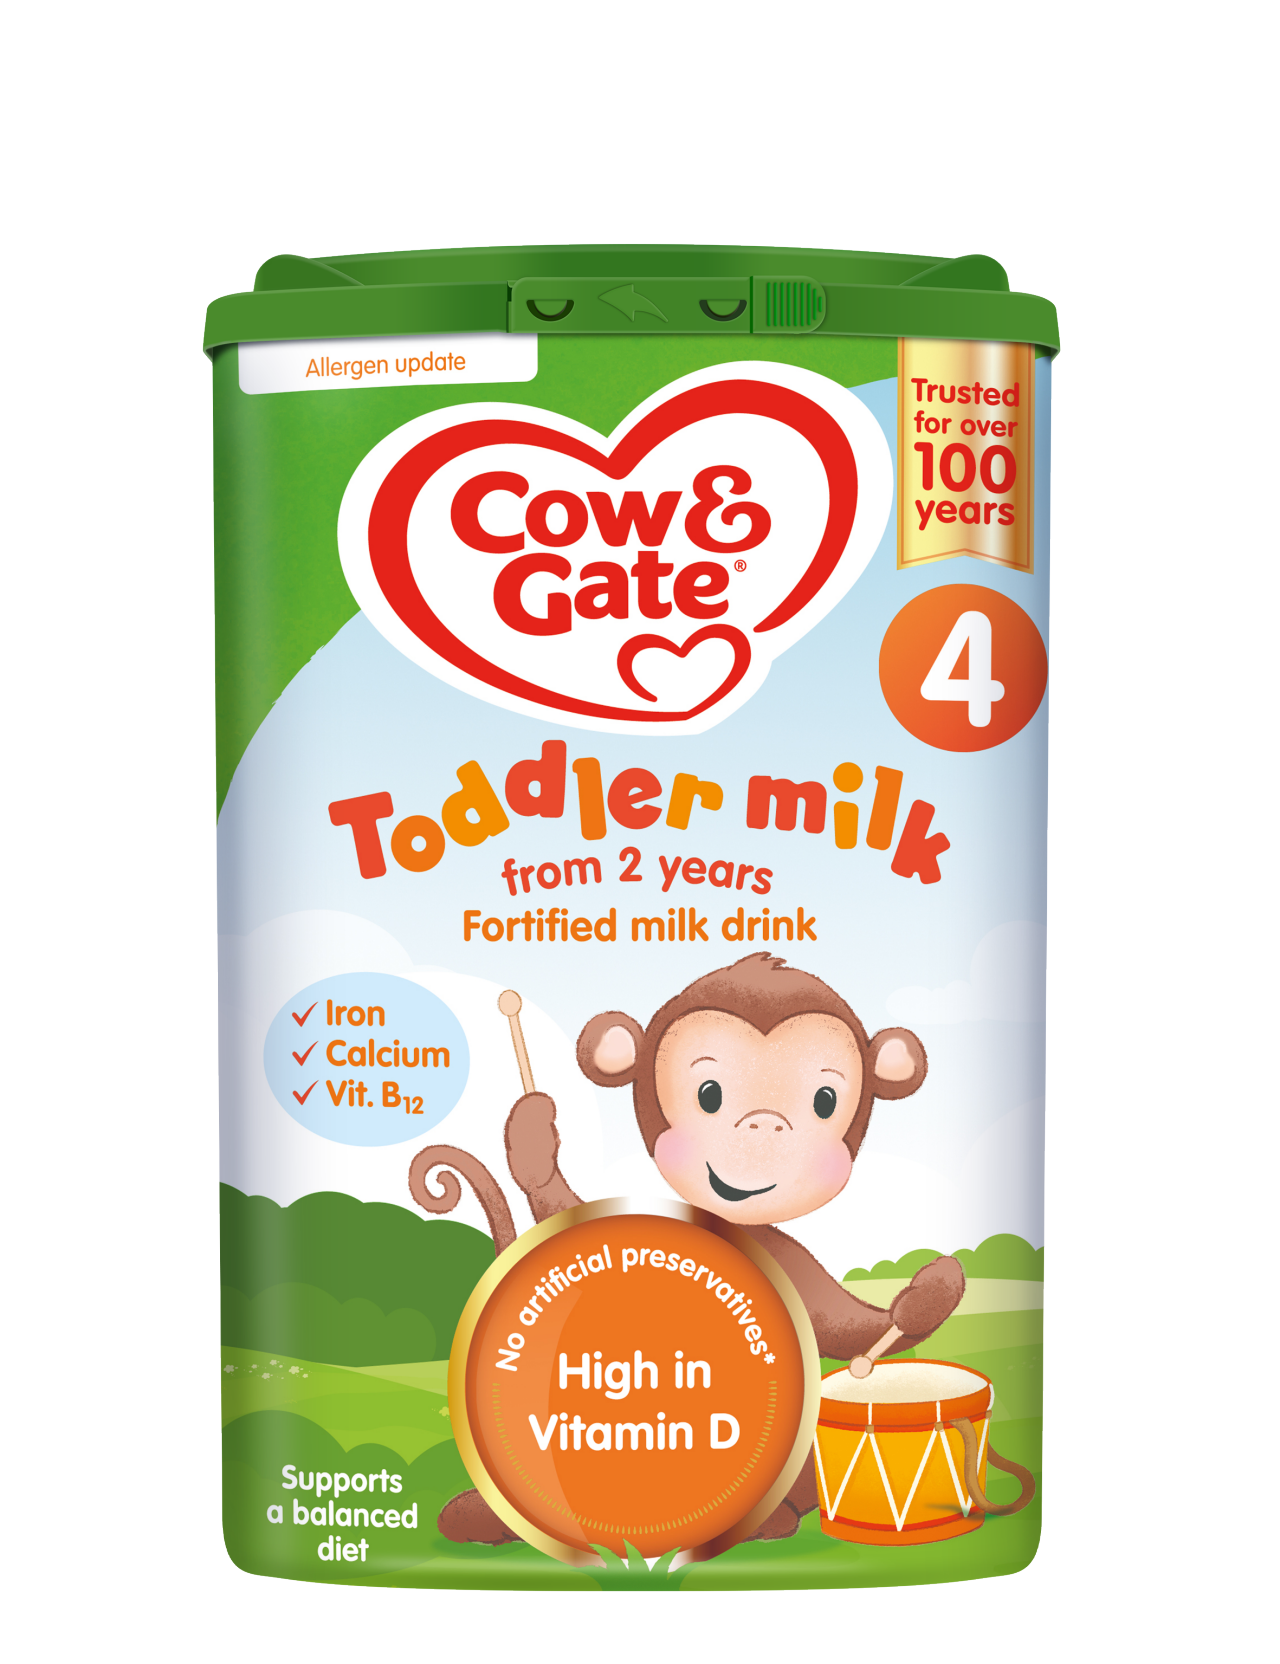 Cow & Gate Toddler milk (2-3 years) (Powder)